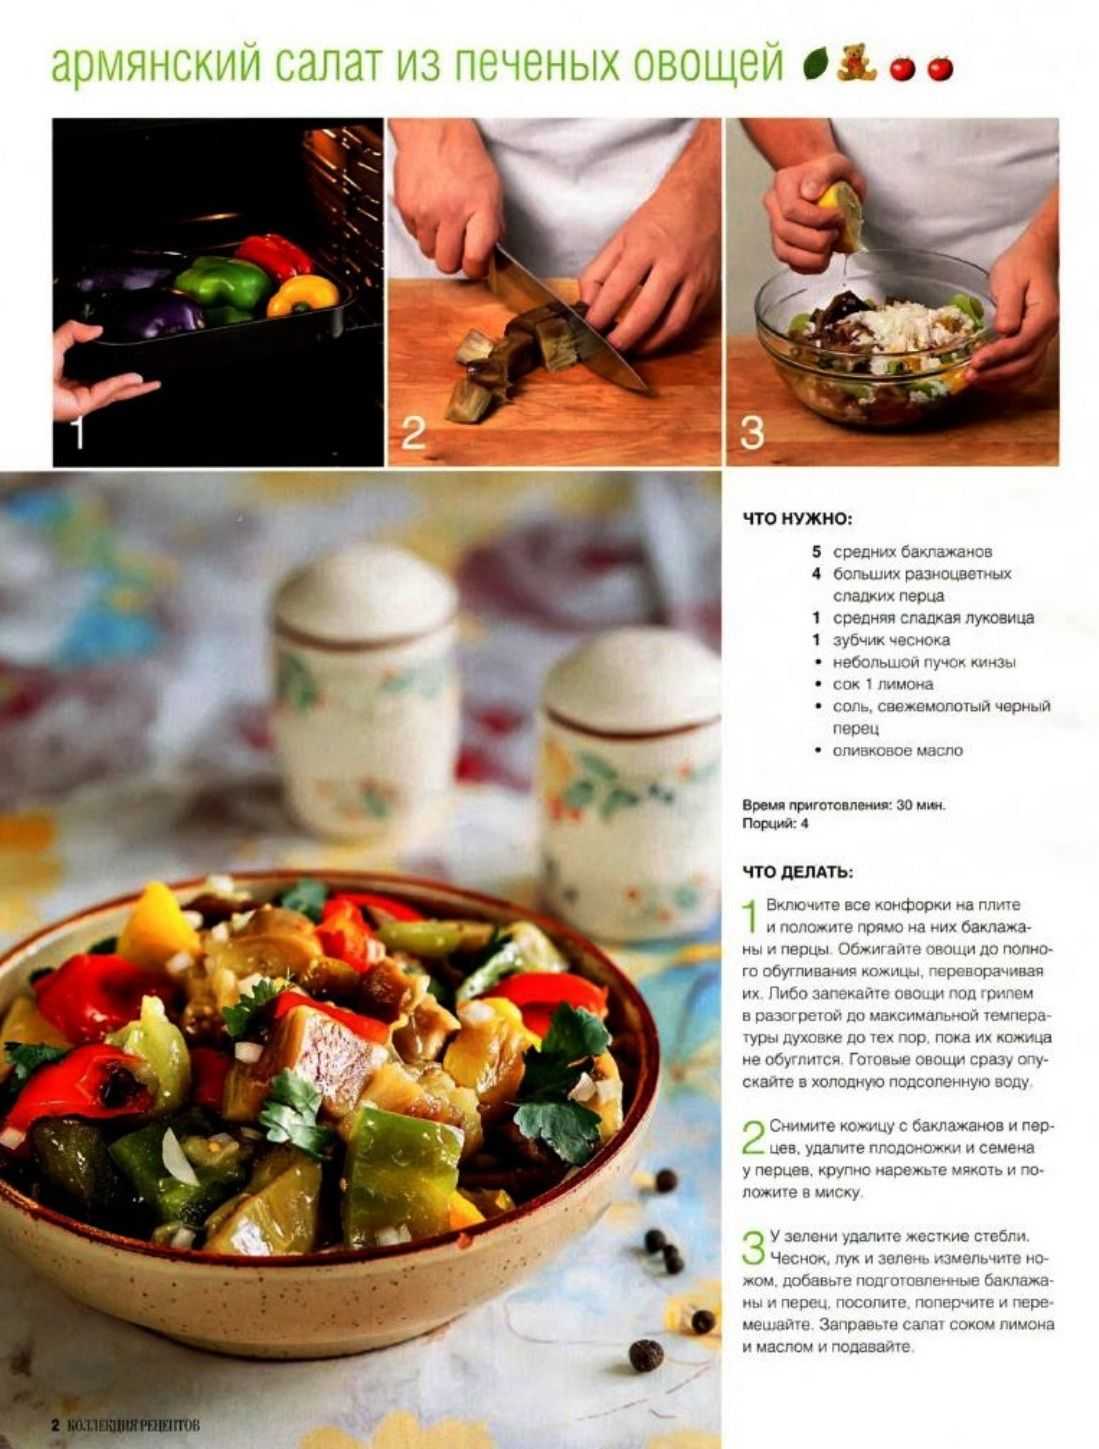 Армянский салат из овощей 4 буквы. Армянский салат с печеными овощами. Армянский салат из печеных овощей в духовке. Ассортимент салатов из запеченных овощей. Овощи запеченные по армянски.